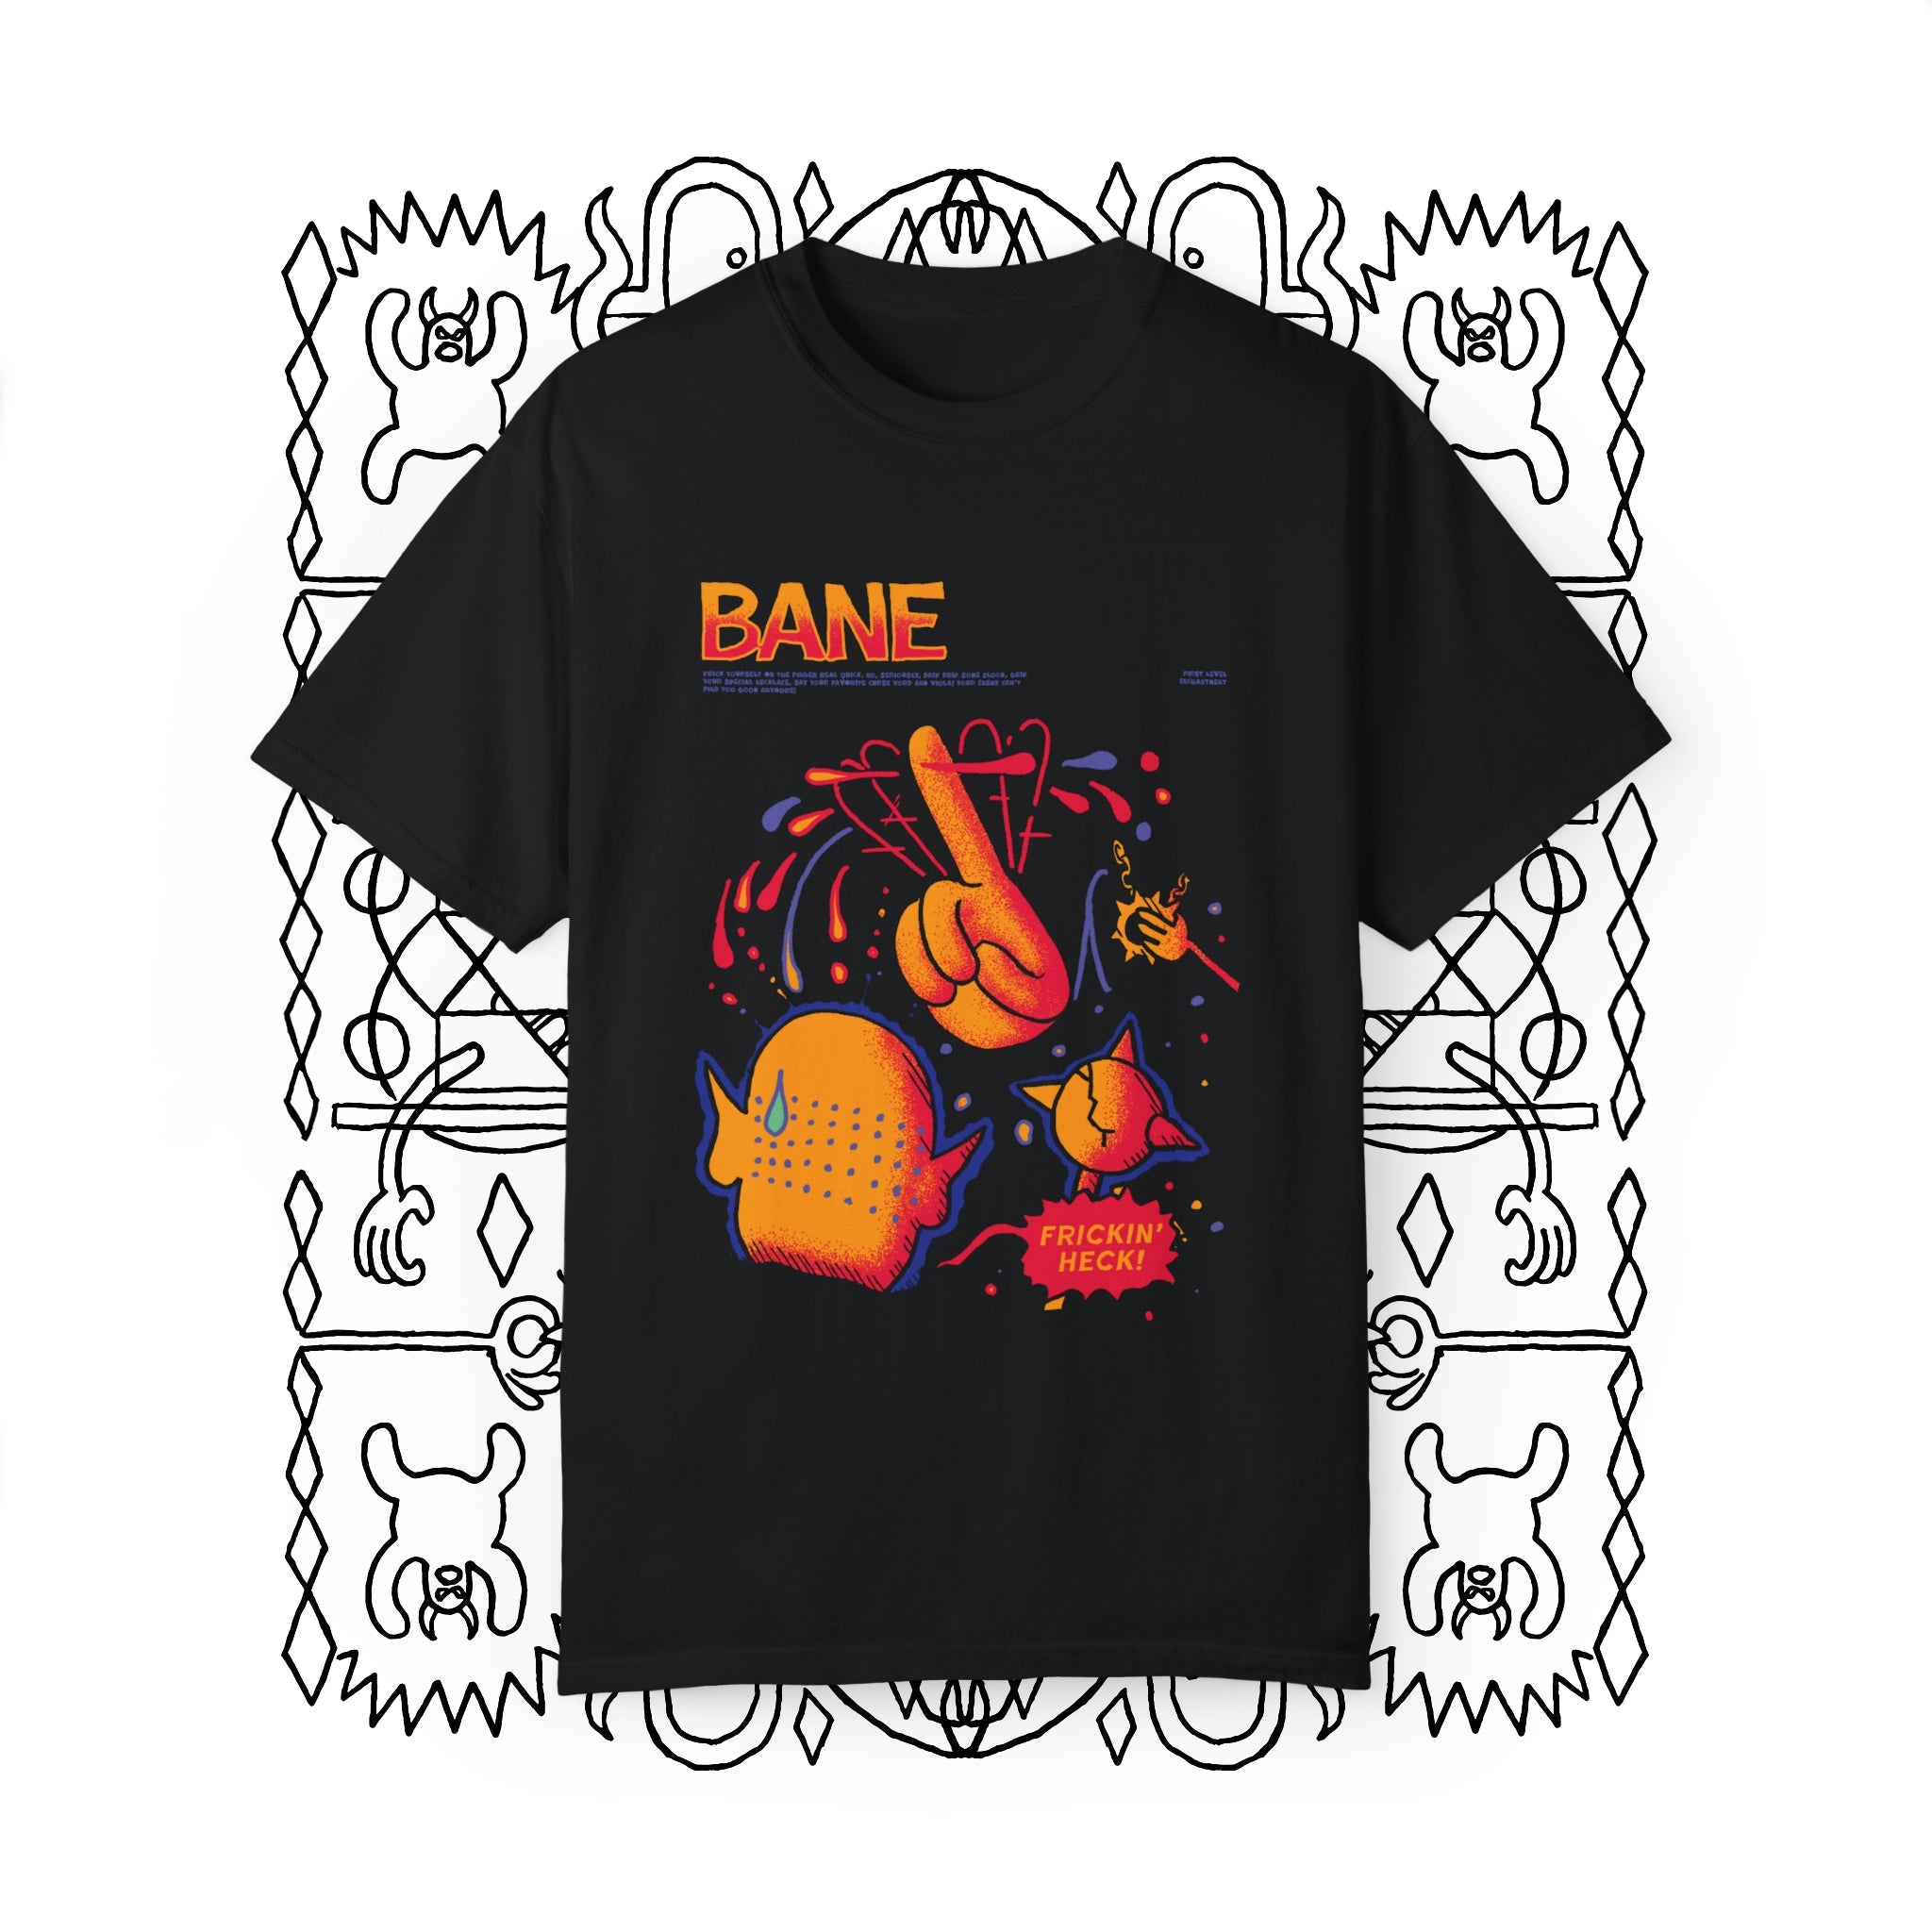 Bane | Comfort Colors T-Shirt - T-Shirt - Ace of Gnomes - 23220179998194183965